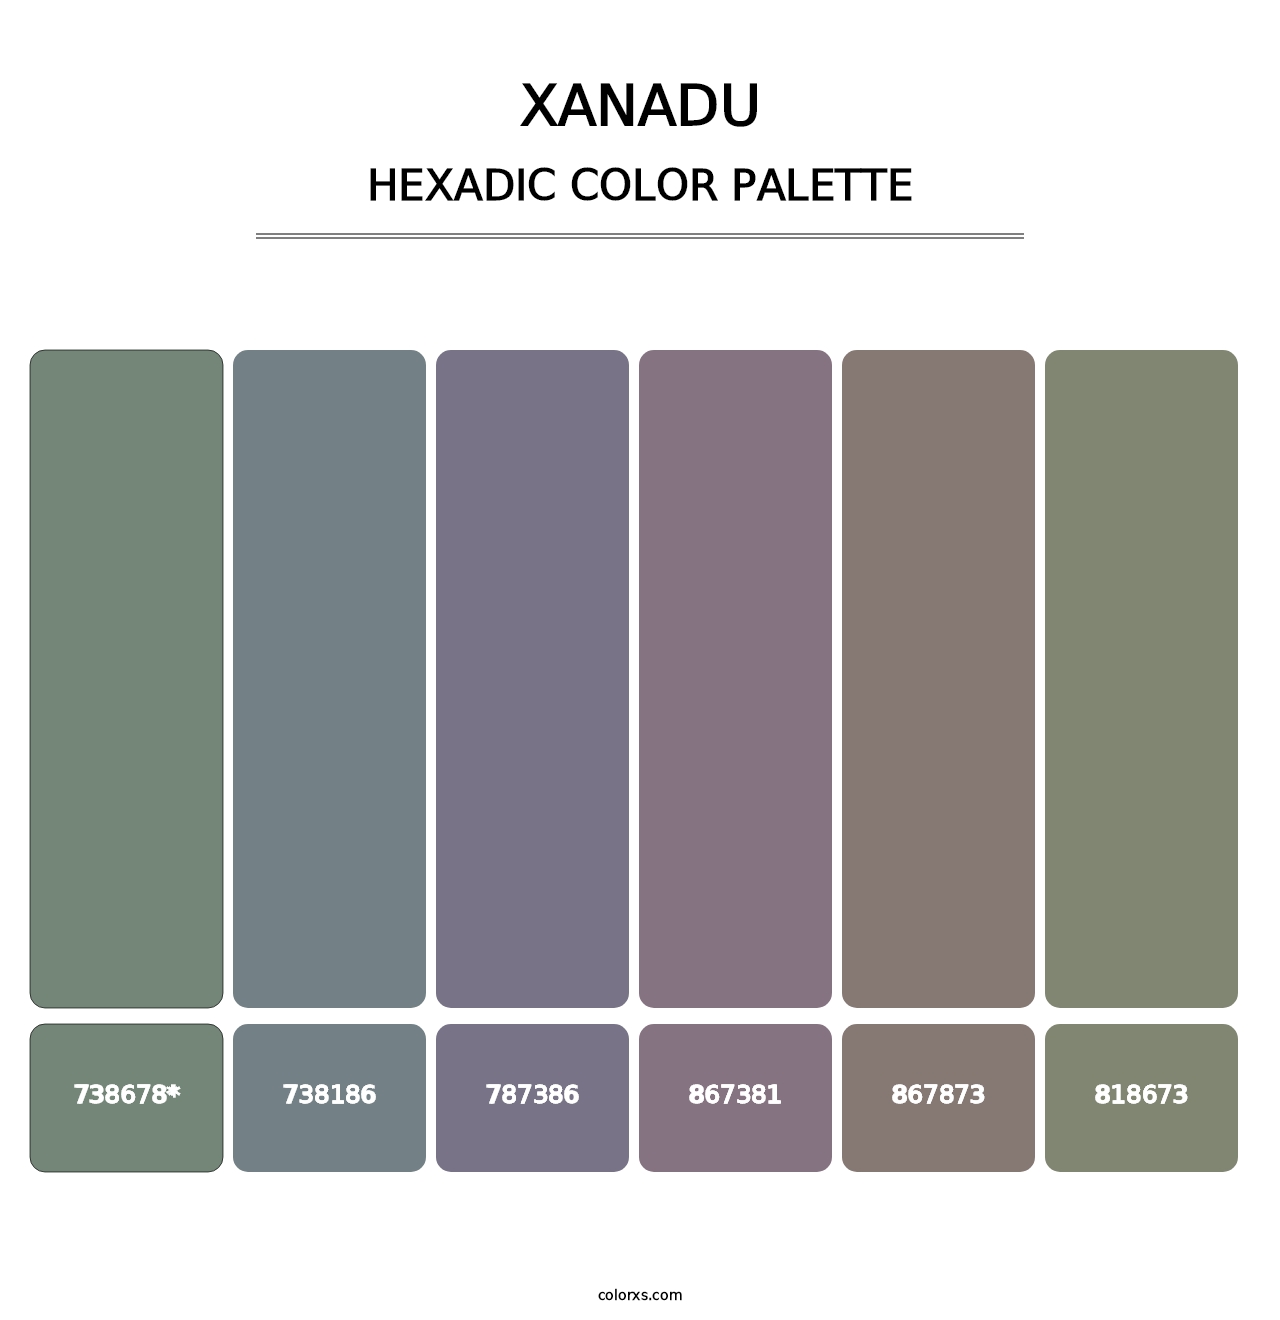 Xanadu - Hexadic Color Palette